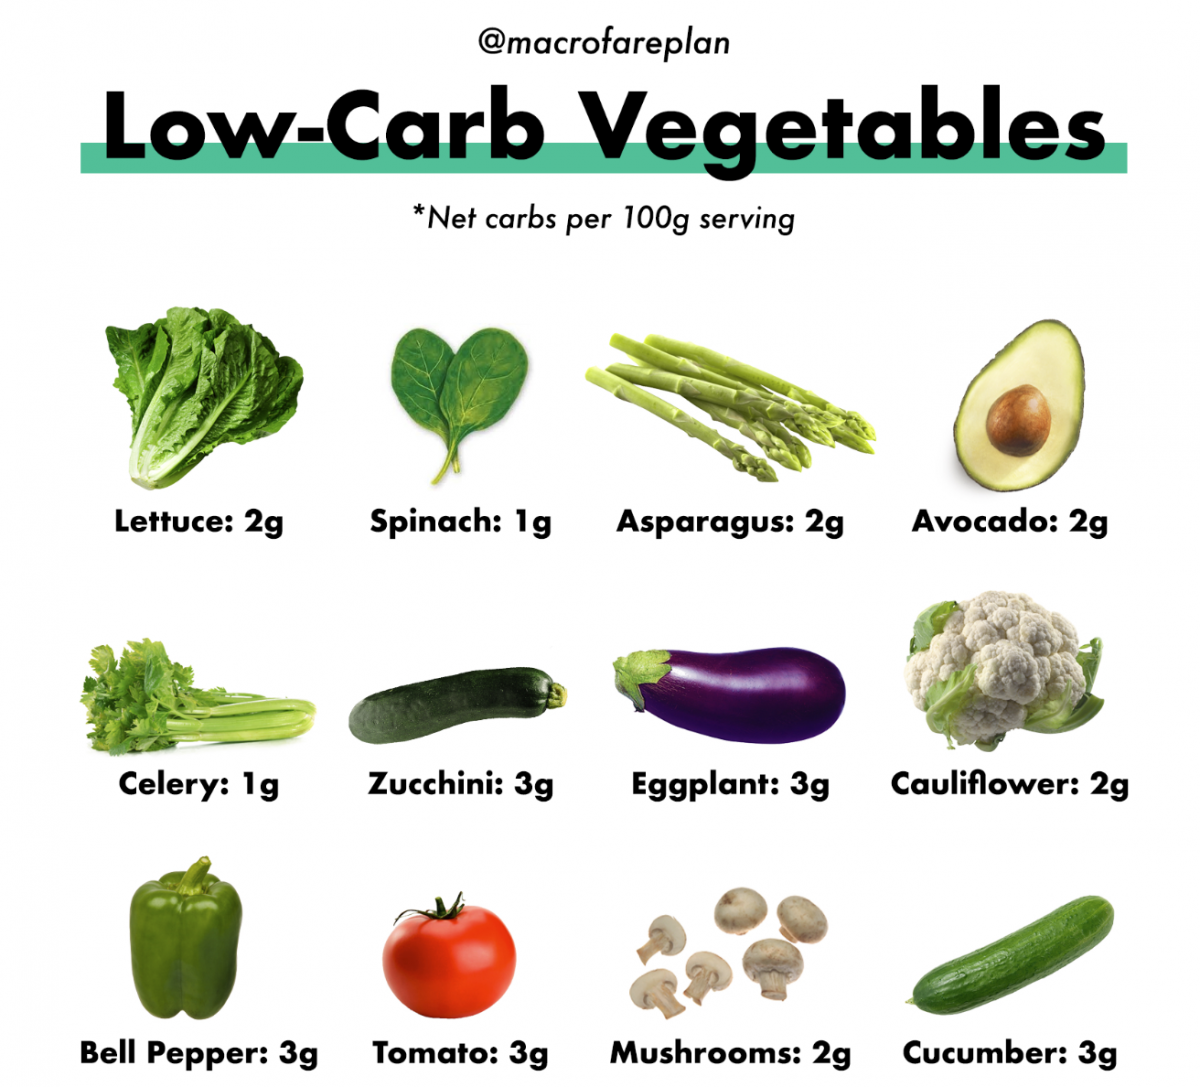 Keto Low-Carb Vegetables - Macrofare